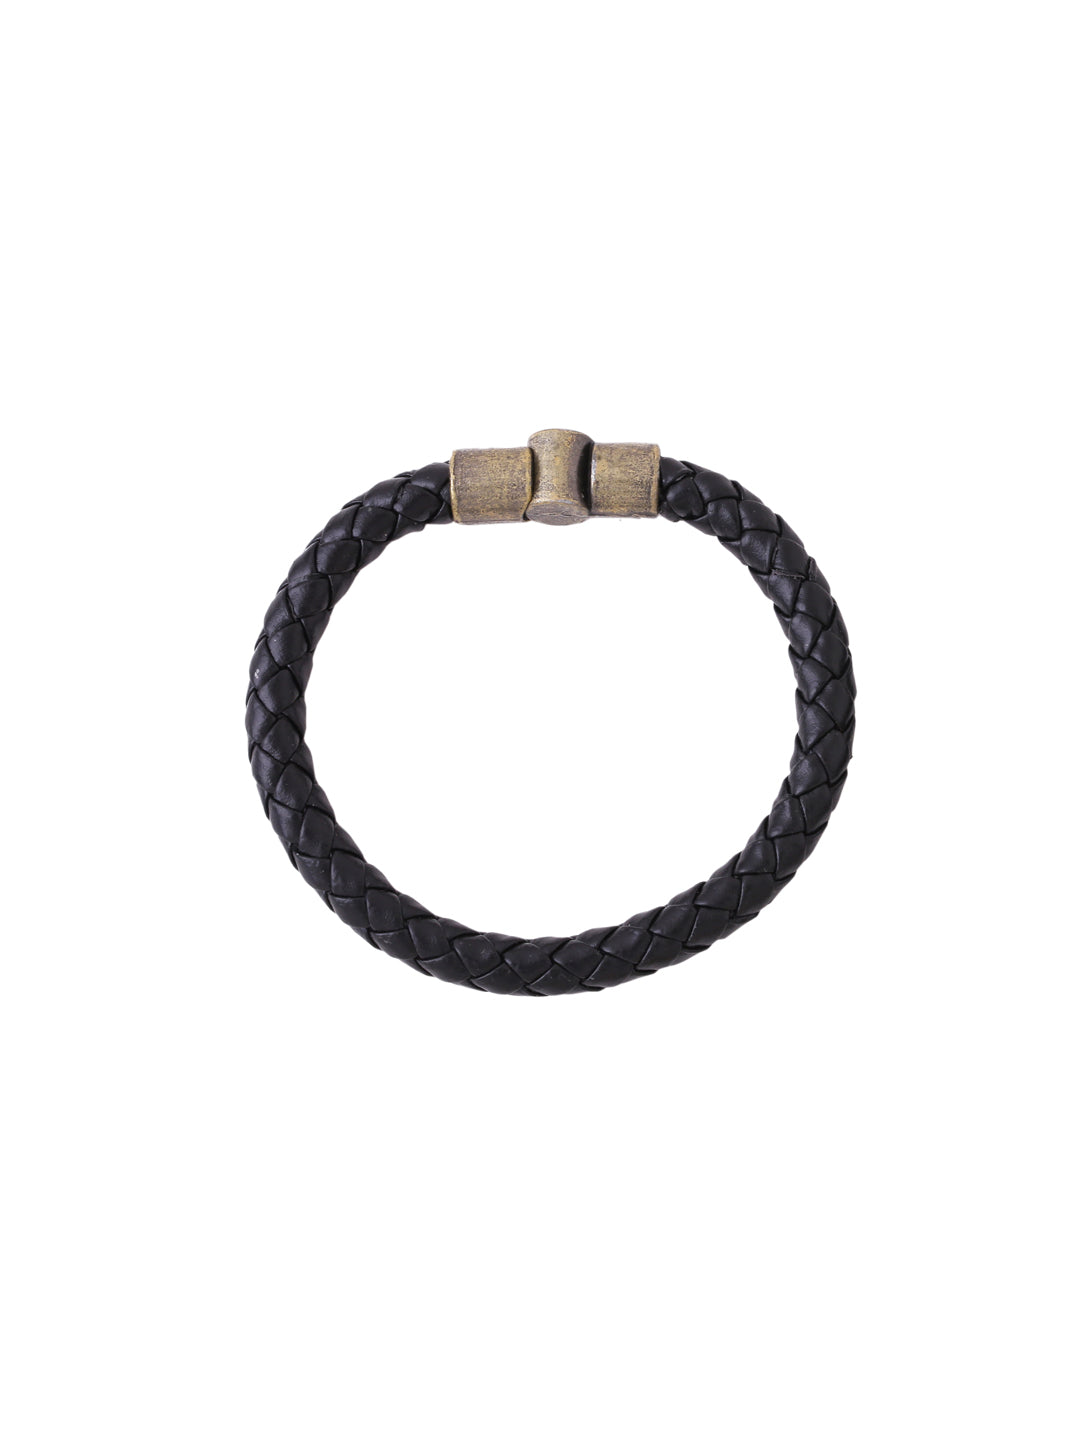 Men's Black leather bracelet - NVR